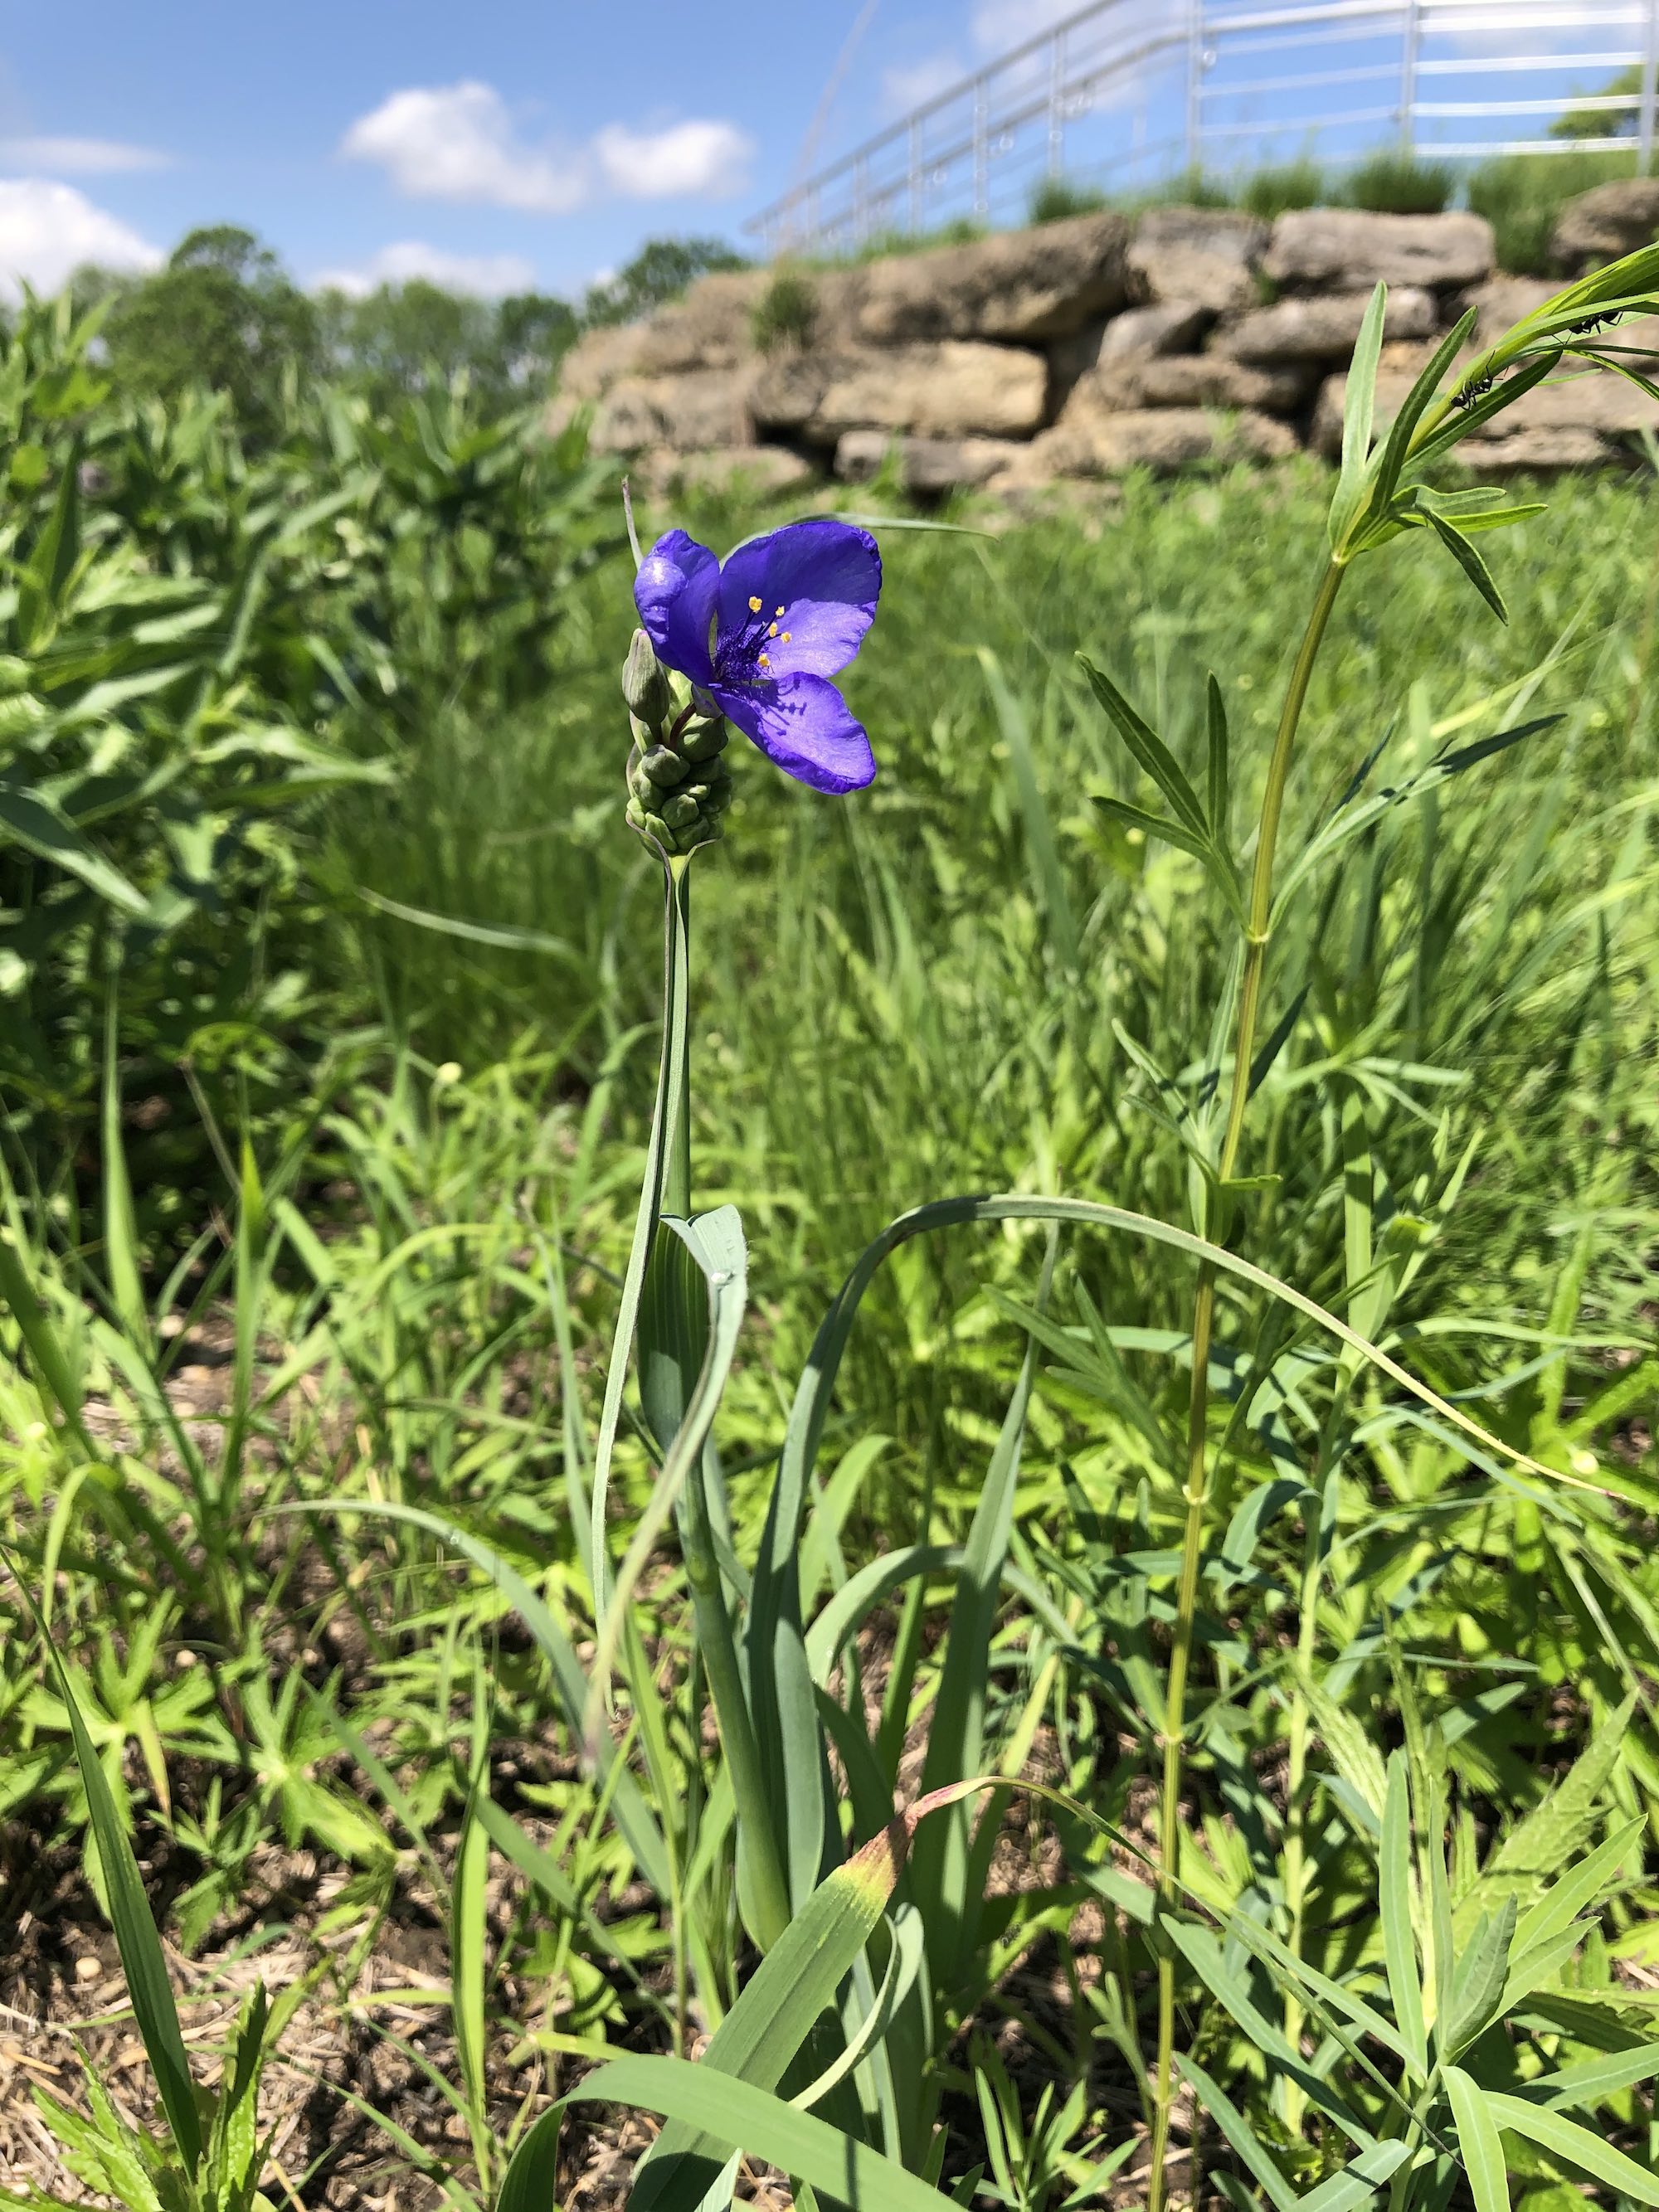 Spiderwort in UW Arboretum near Visitors Center in Madison, Wisconsin on May 22, 2021.